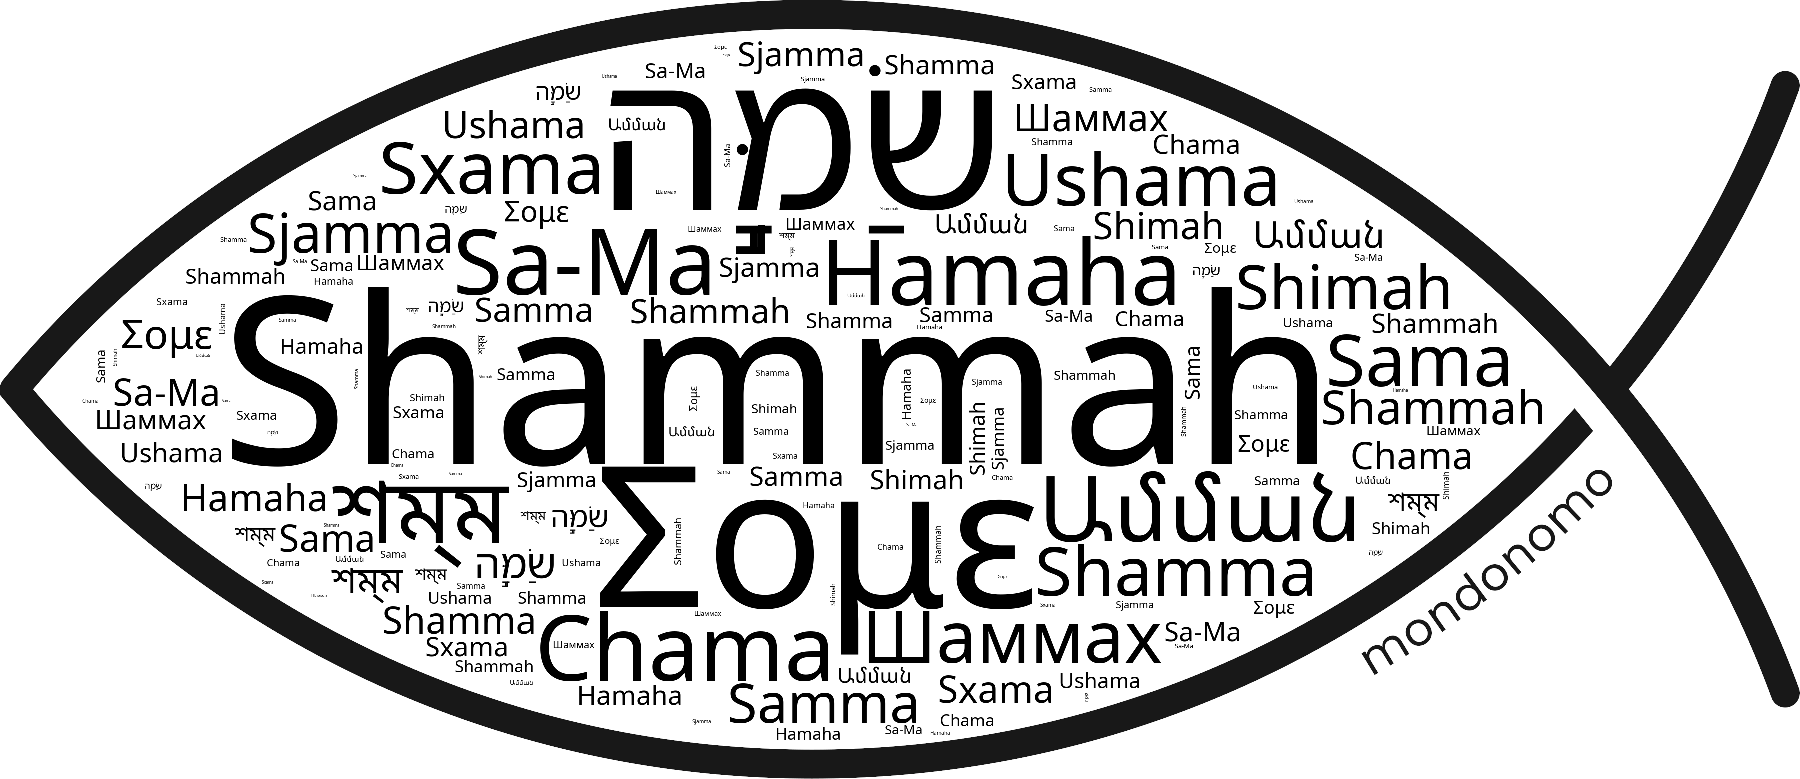 Name Shammah in the world's Bibles